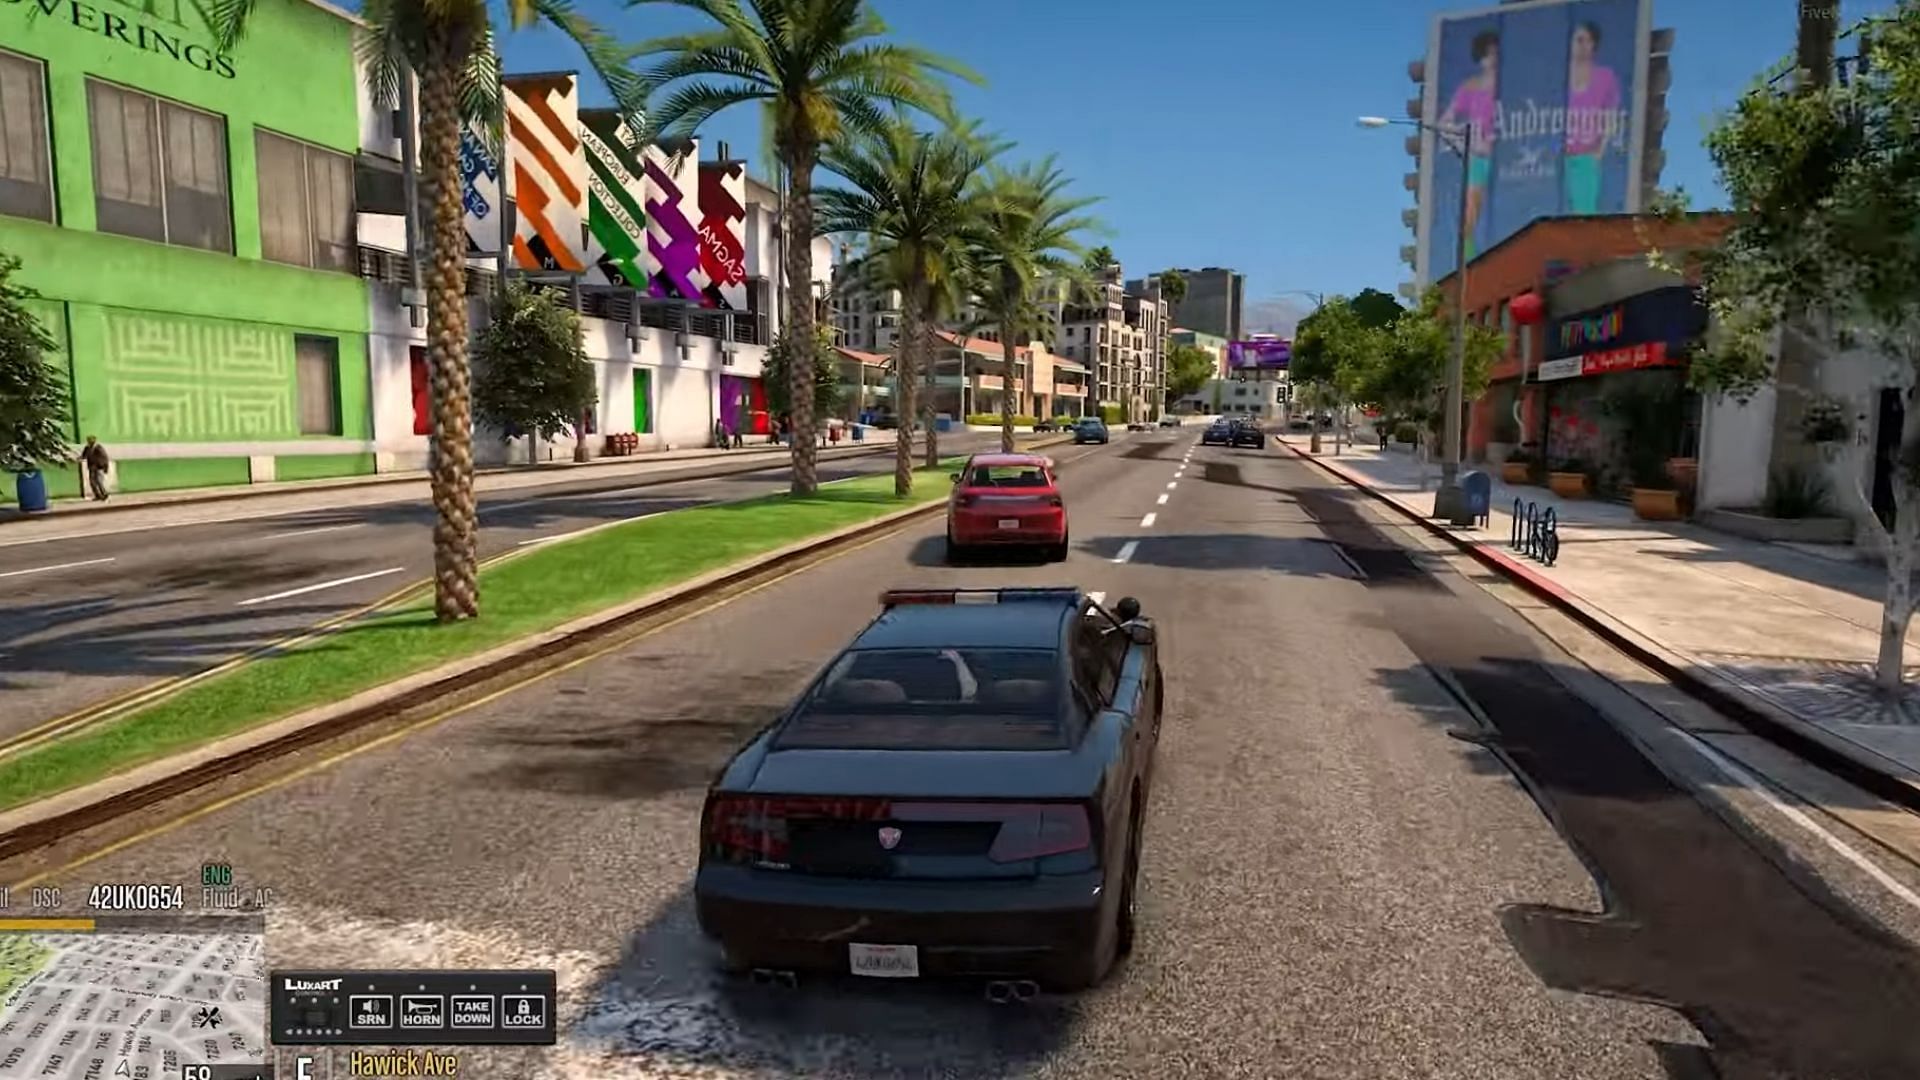 NVE is an amazing graphics mod for GTA 5 (Image via YouTube/WolfyGoinDark)